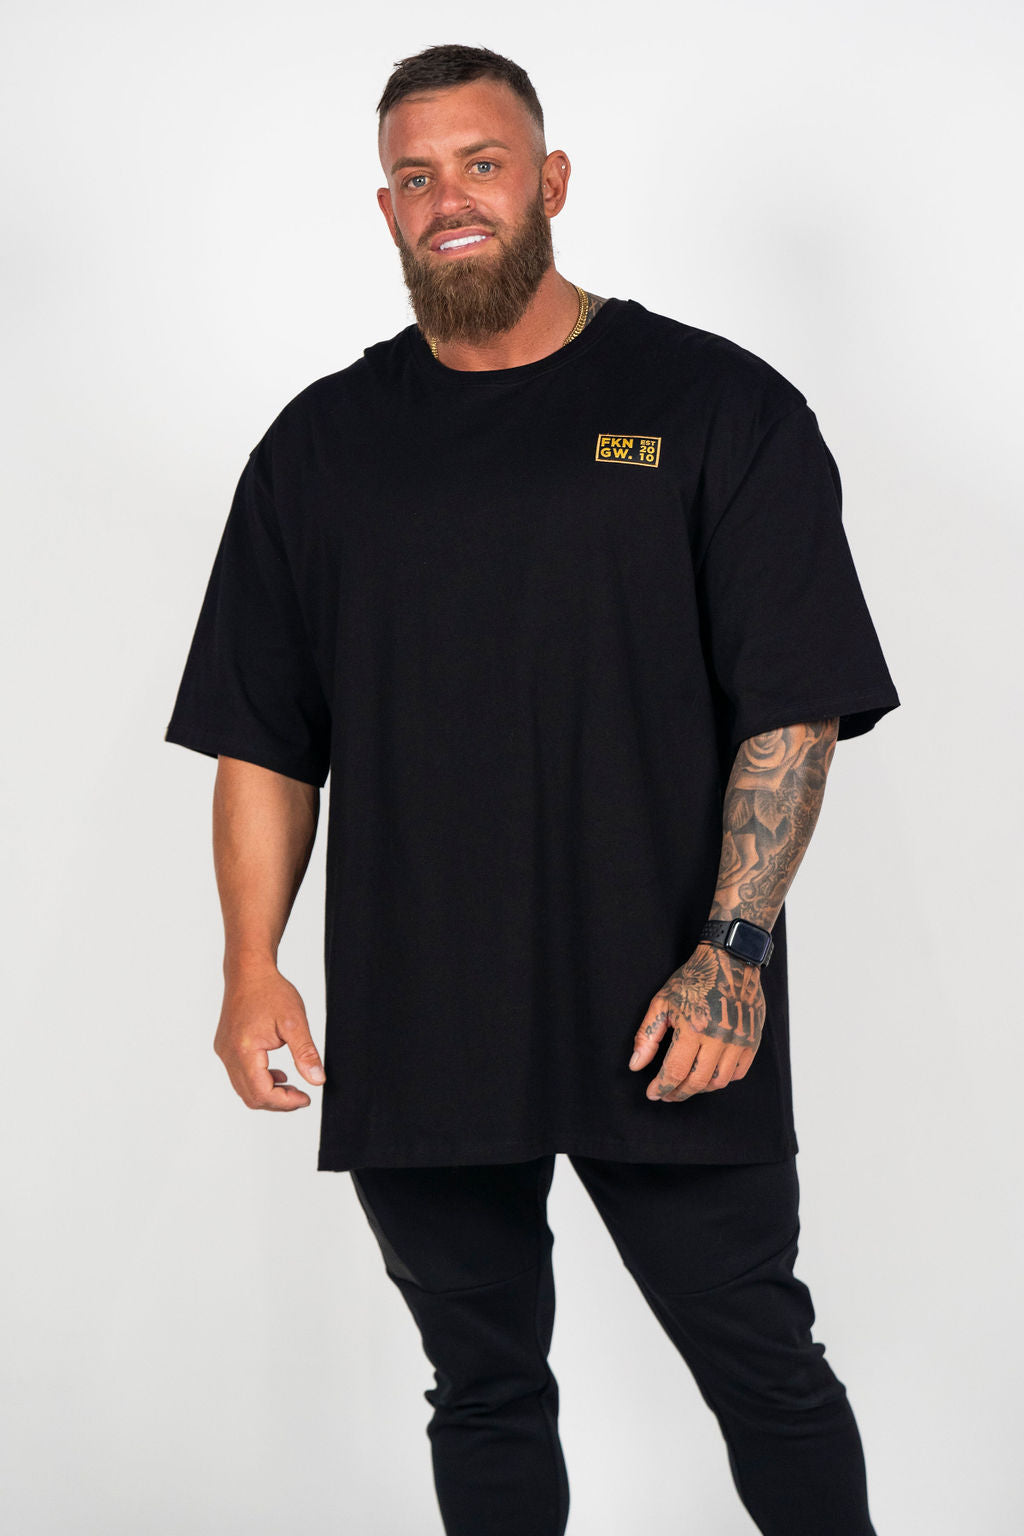 FKN GOLD | Men's Oversized Pump Cover Gym T-Shirt | Black & Gold